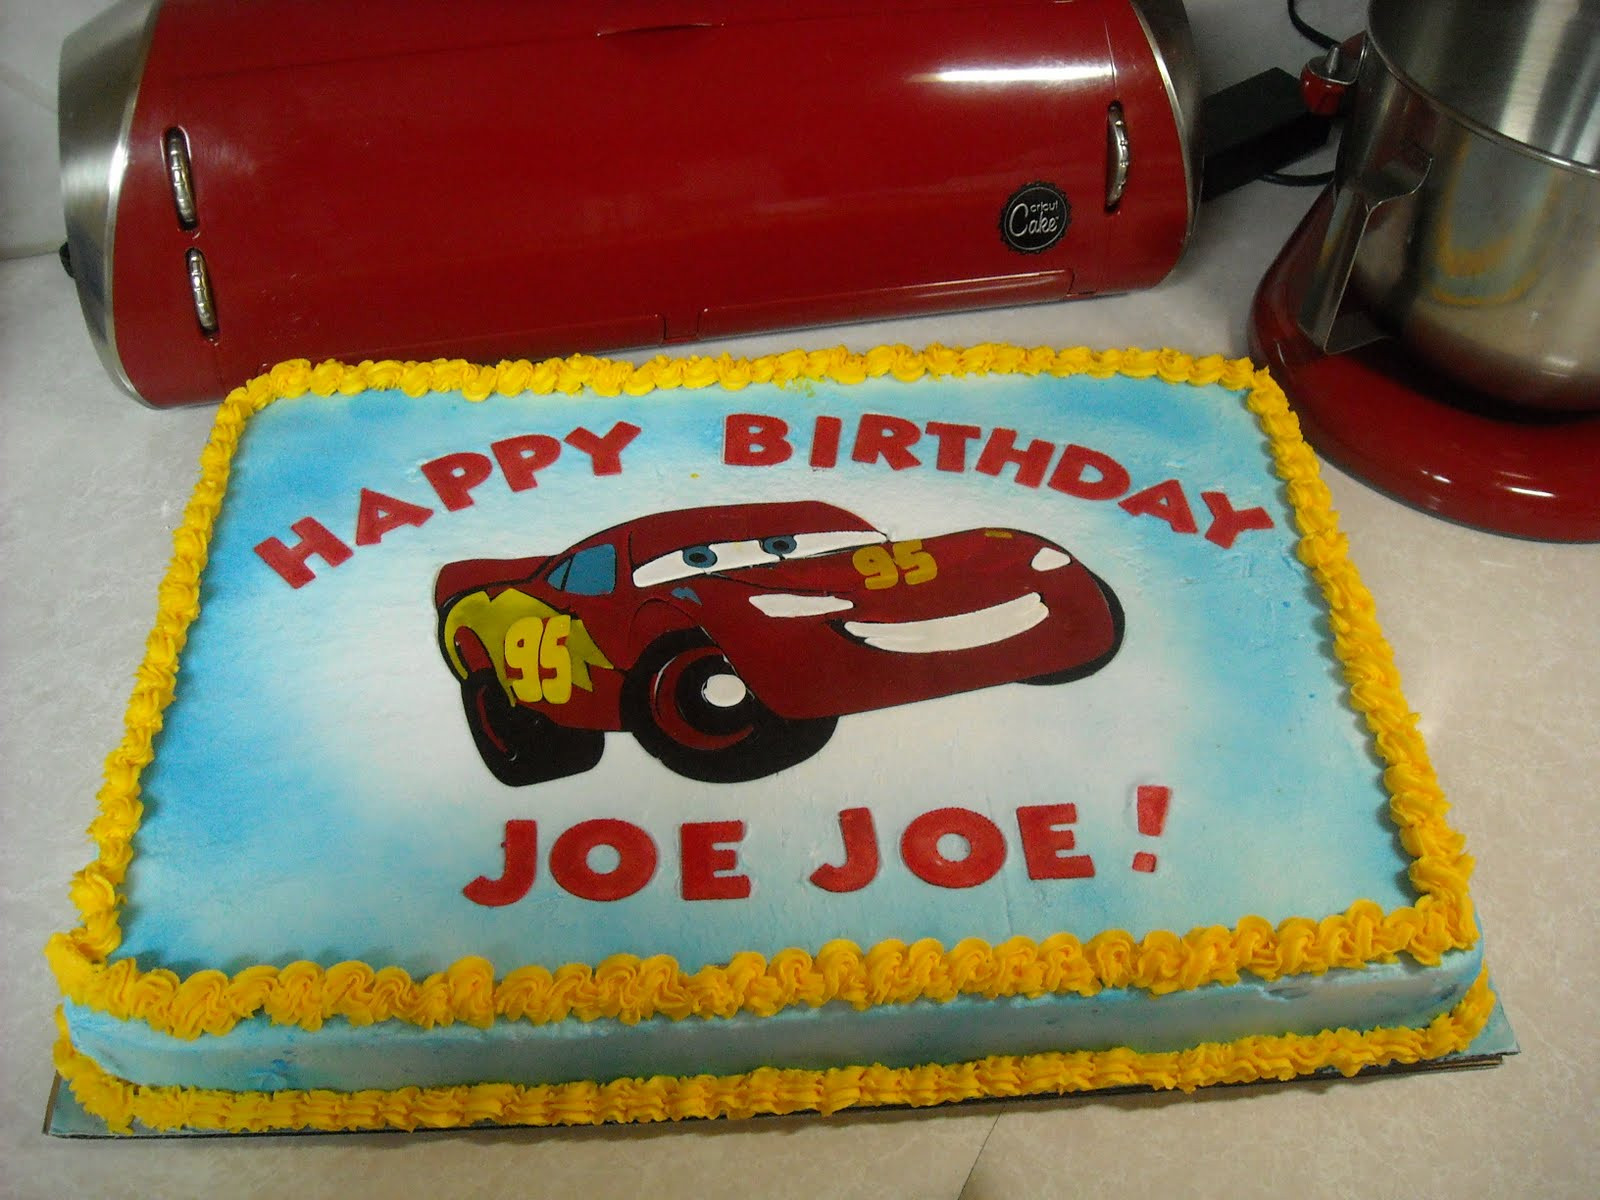 Best ideas about Happy Birthday Joe Cake
. Save or Pin Princess Memories by Brenda Joe Joe s Birthday Cake Now.